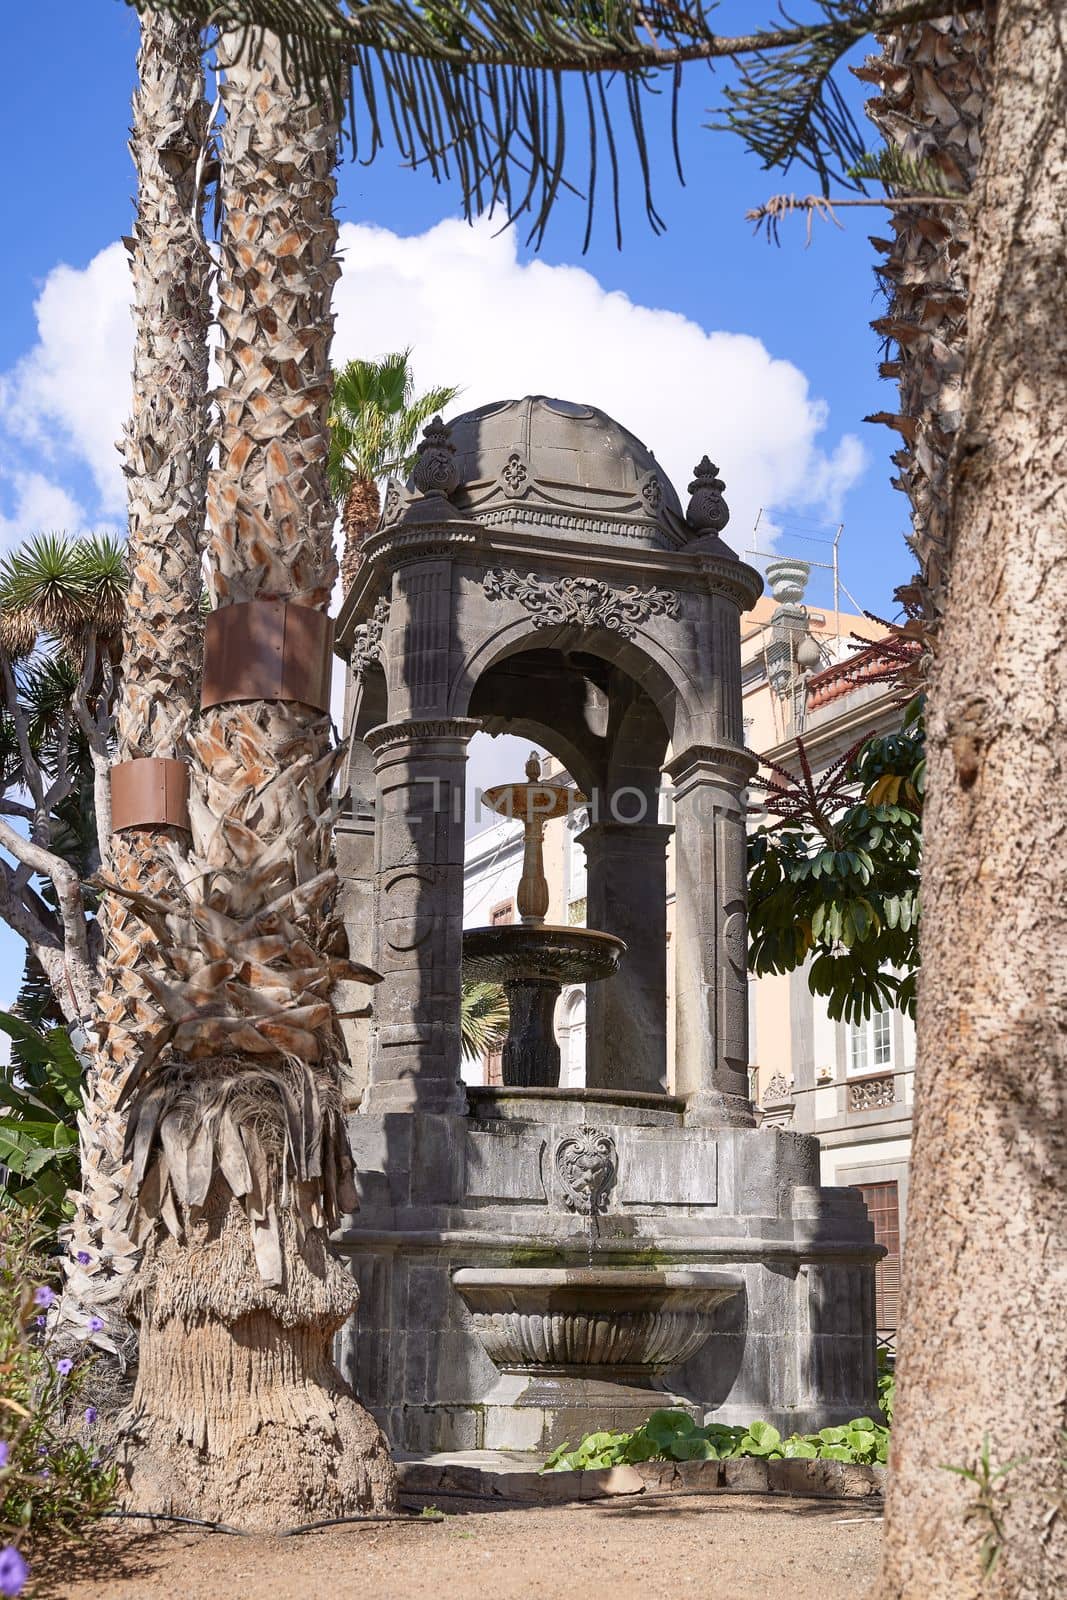 Outdoor fountain with medieval architecture and palm trees at Plaza del Espiritu Santo in Vegueta, Las Palmas de Gran Canaria, Spain